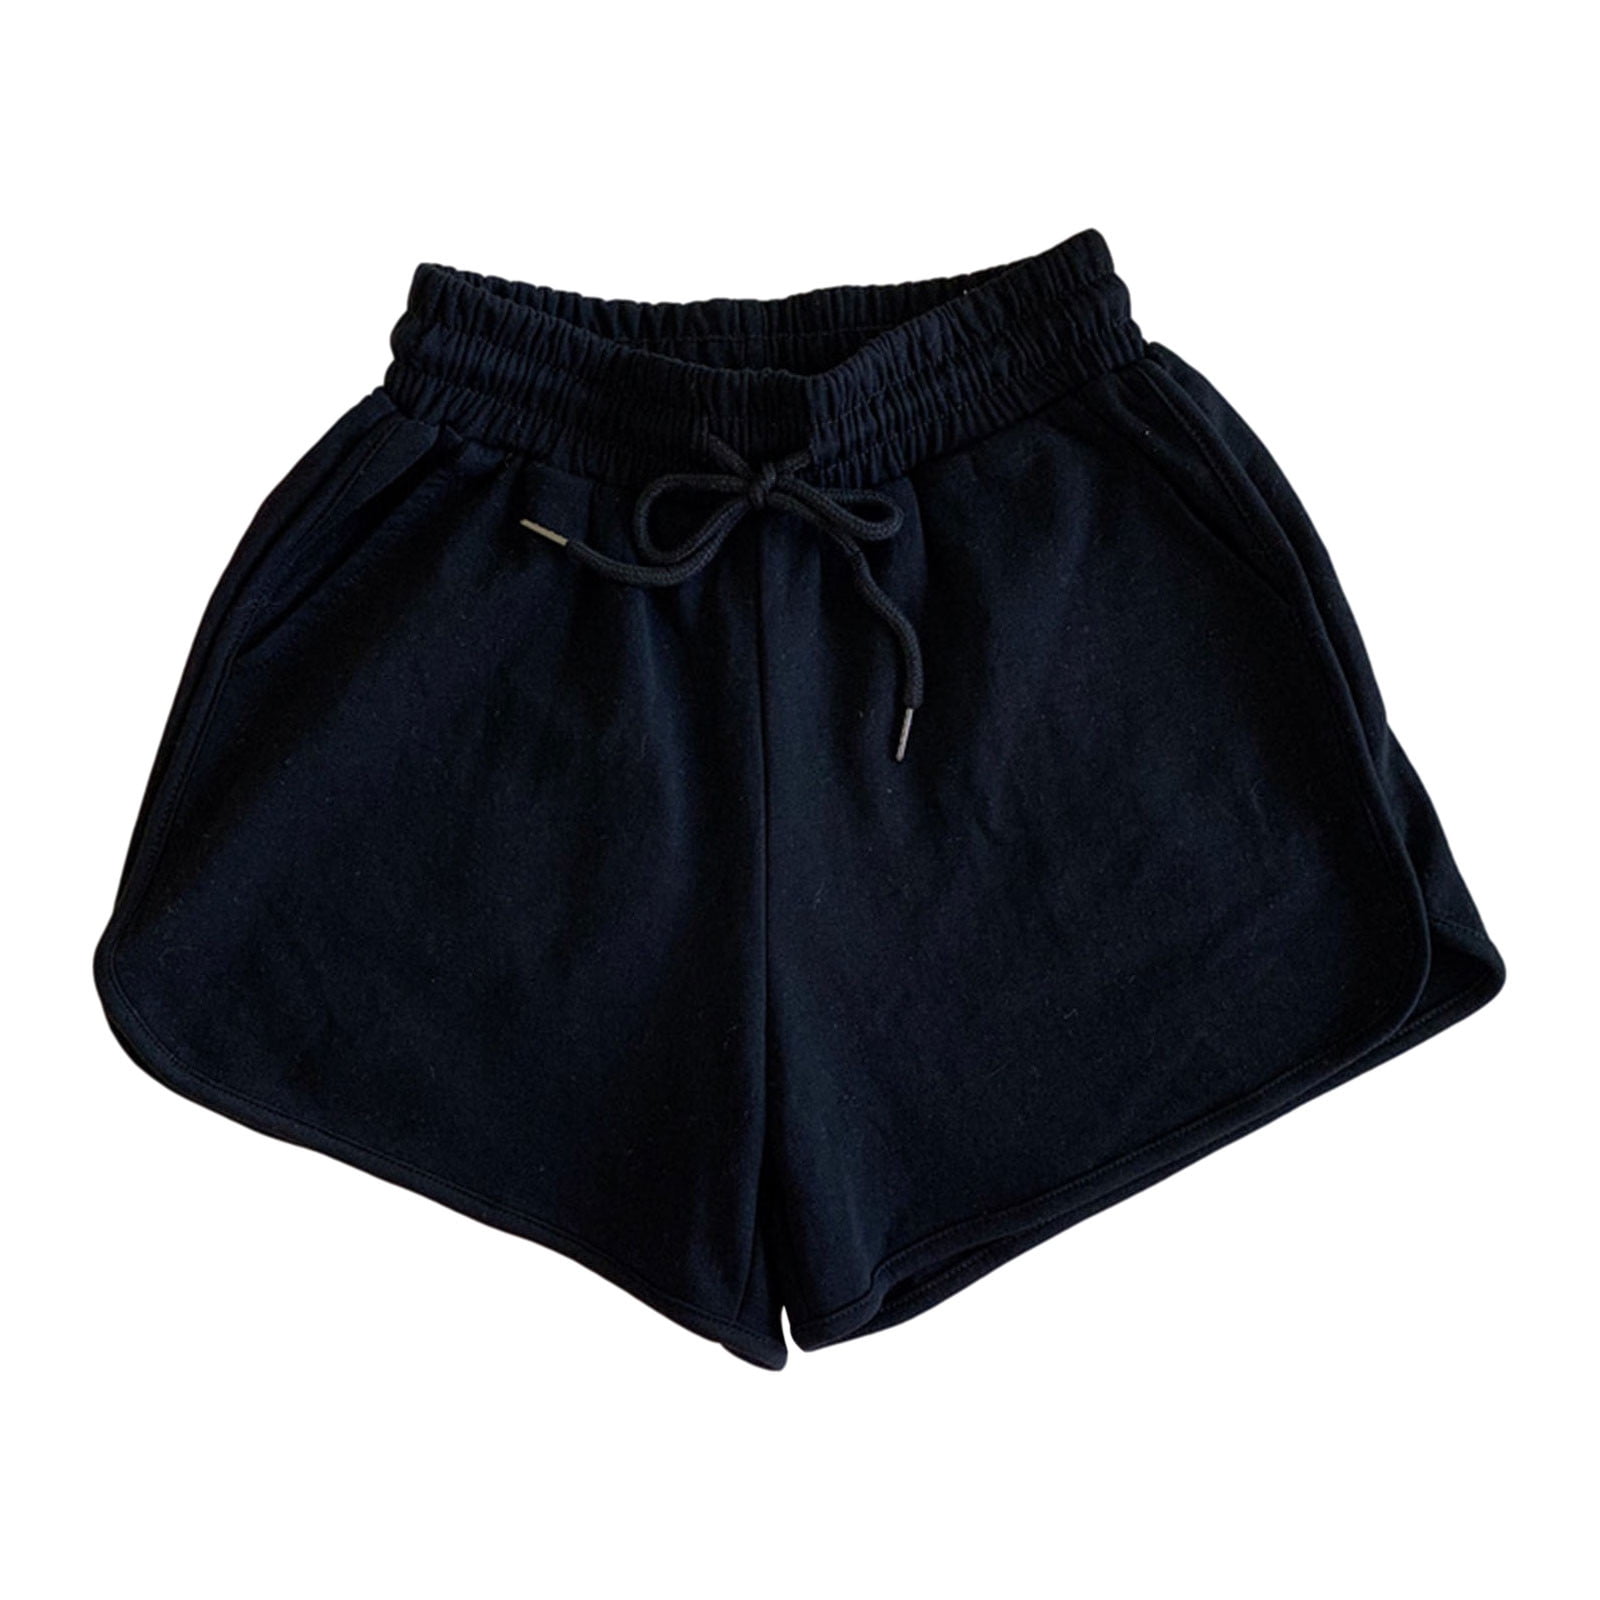 Finelylove Beach Shorts For Women Ododos Shorts Shorts High Waist Rise  Solid Black M 